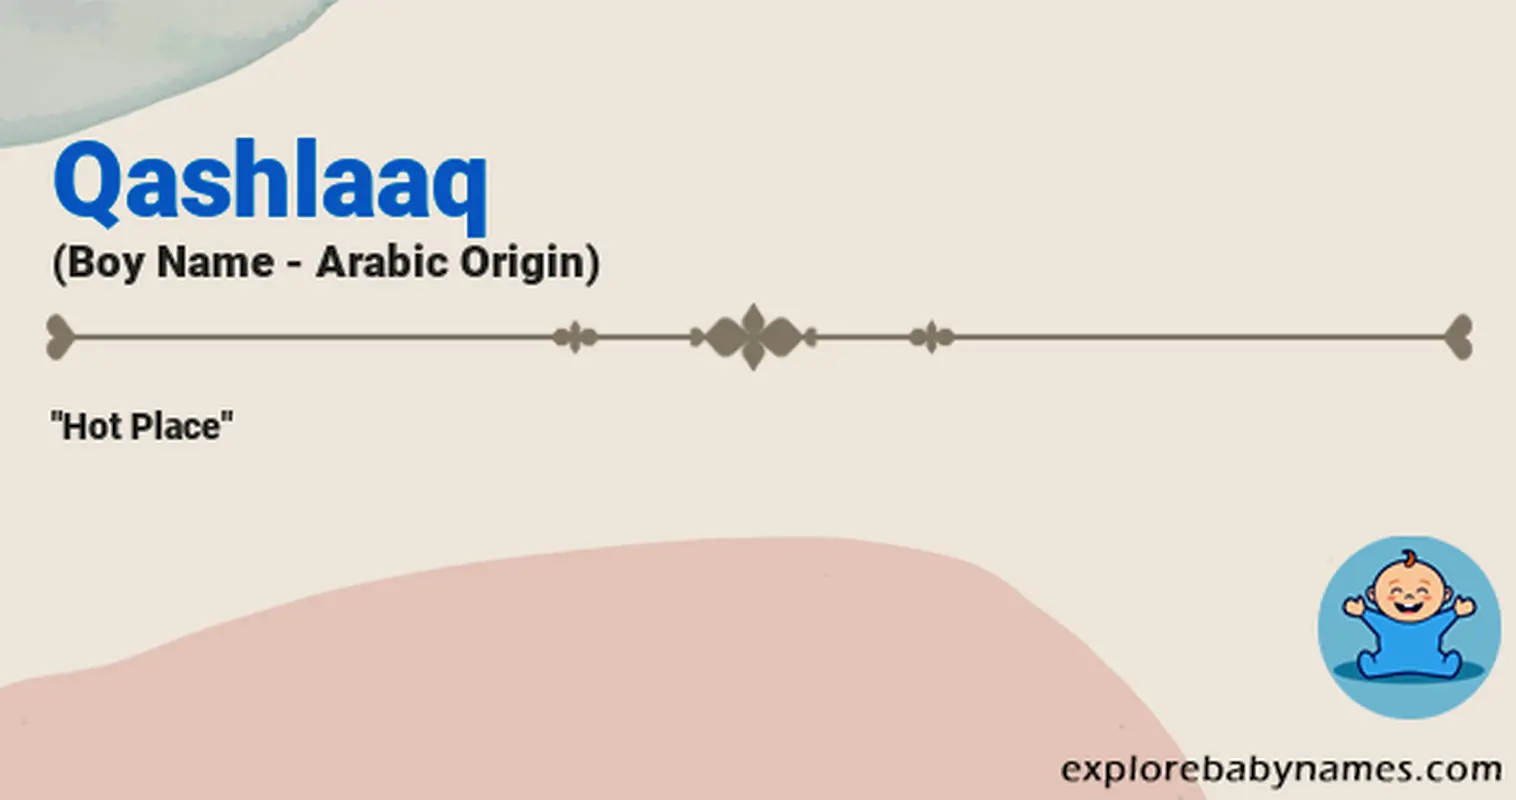 Meaning of Qashlaaq